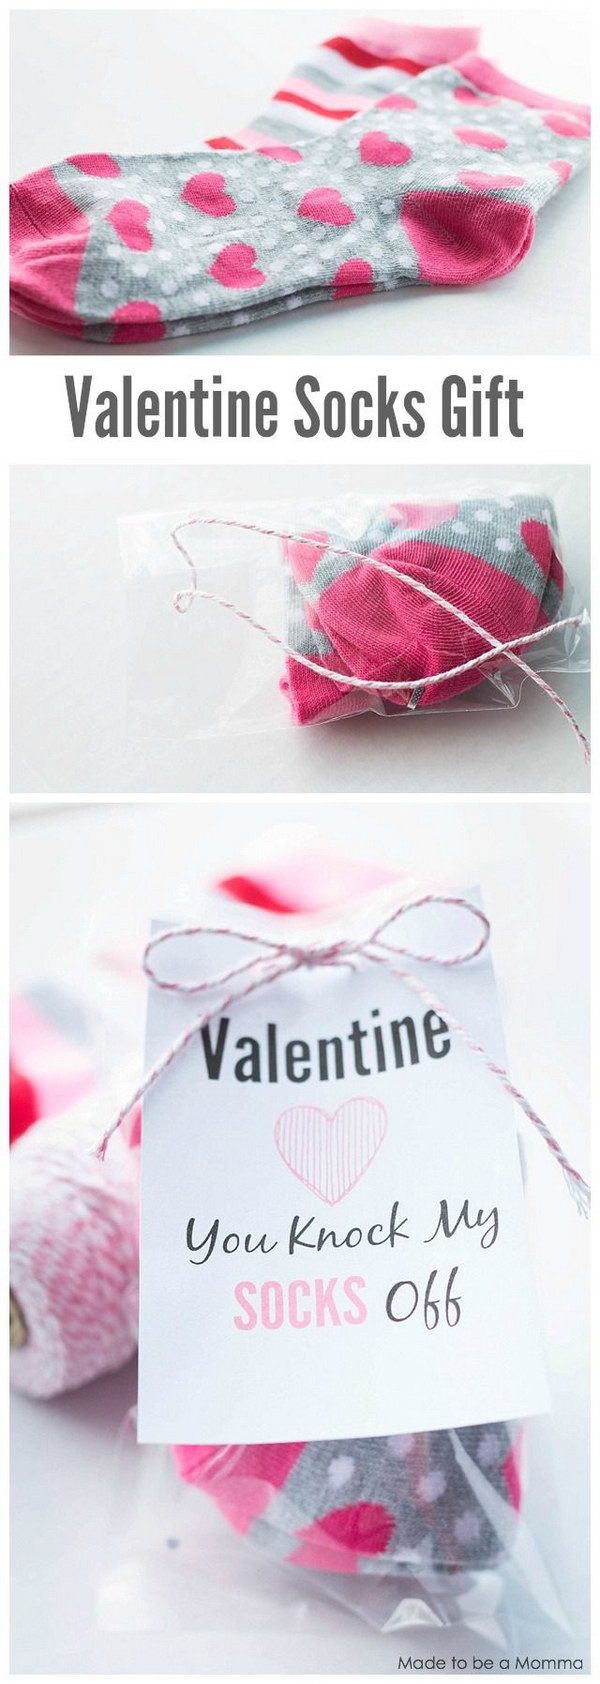 Valentine Socks Gift Idea with Free Printable 